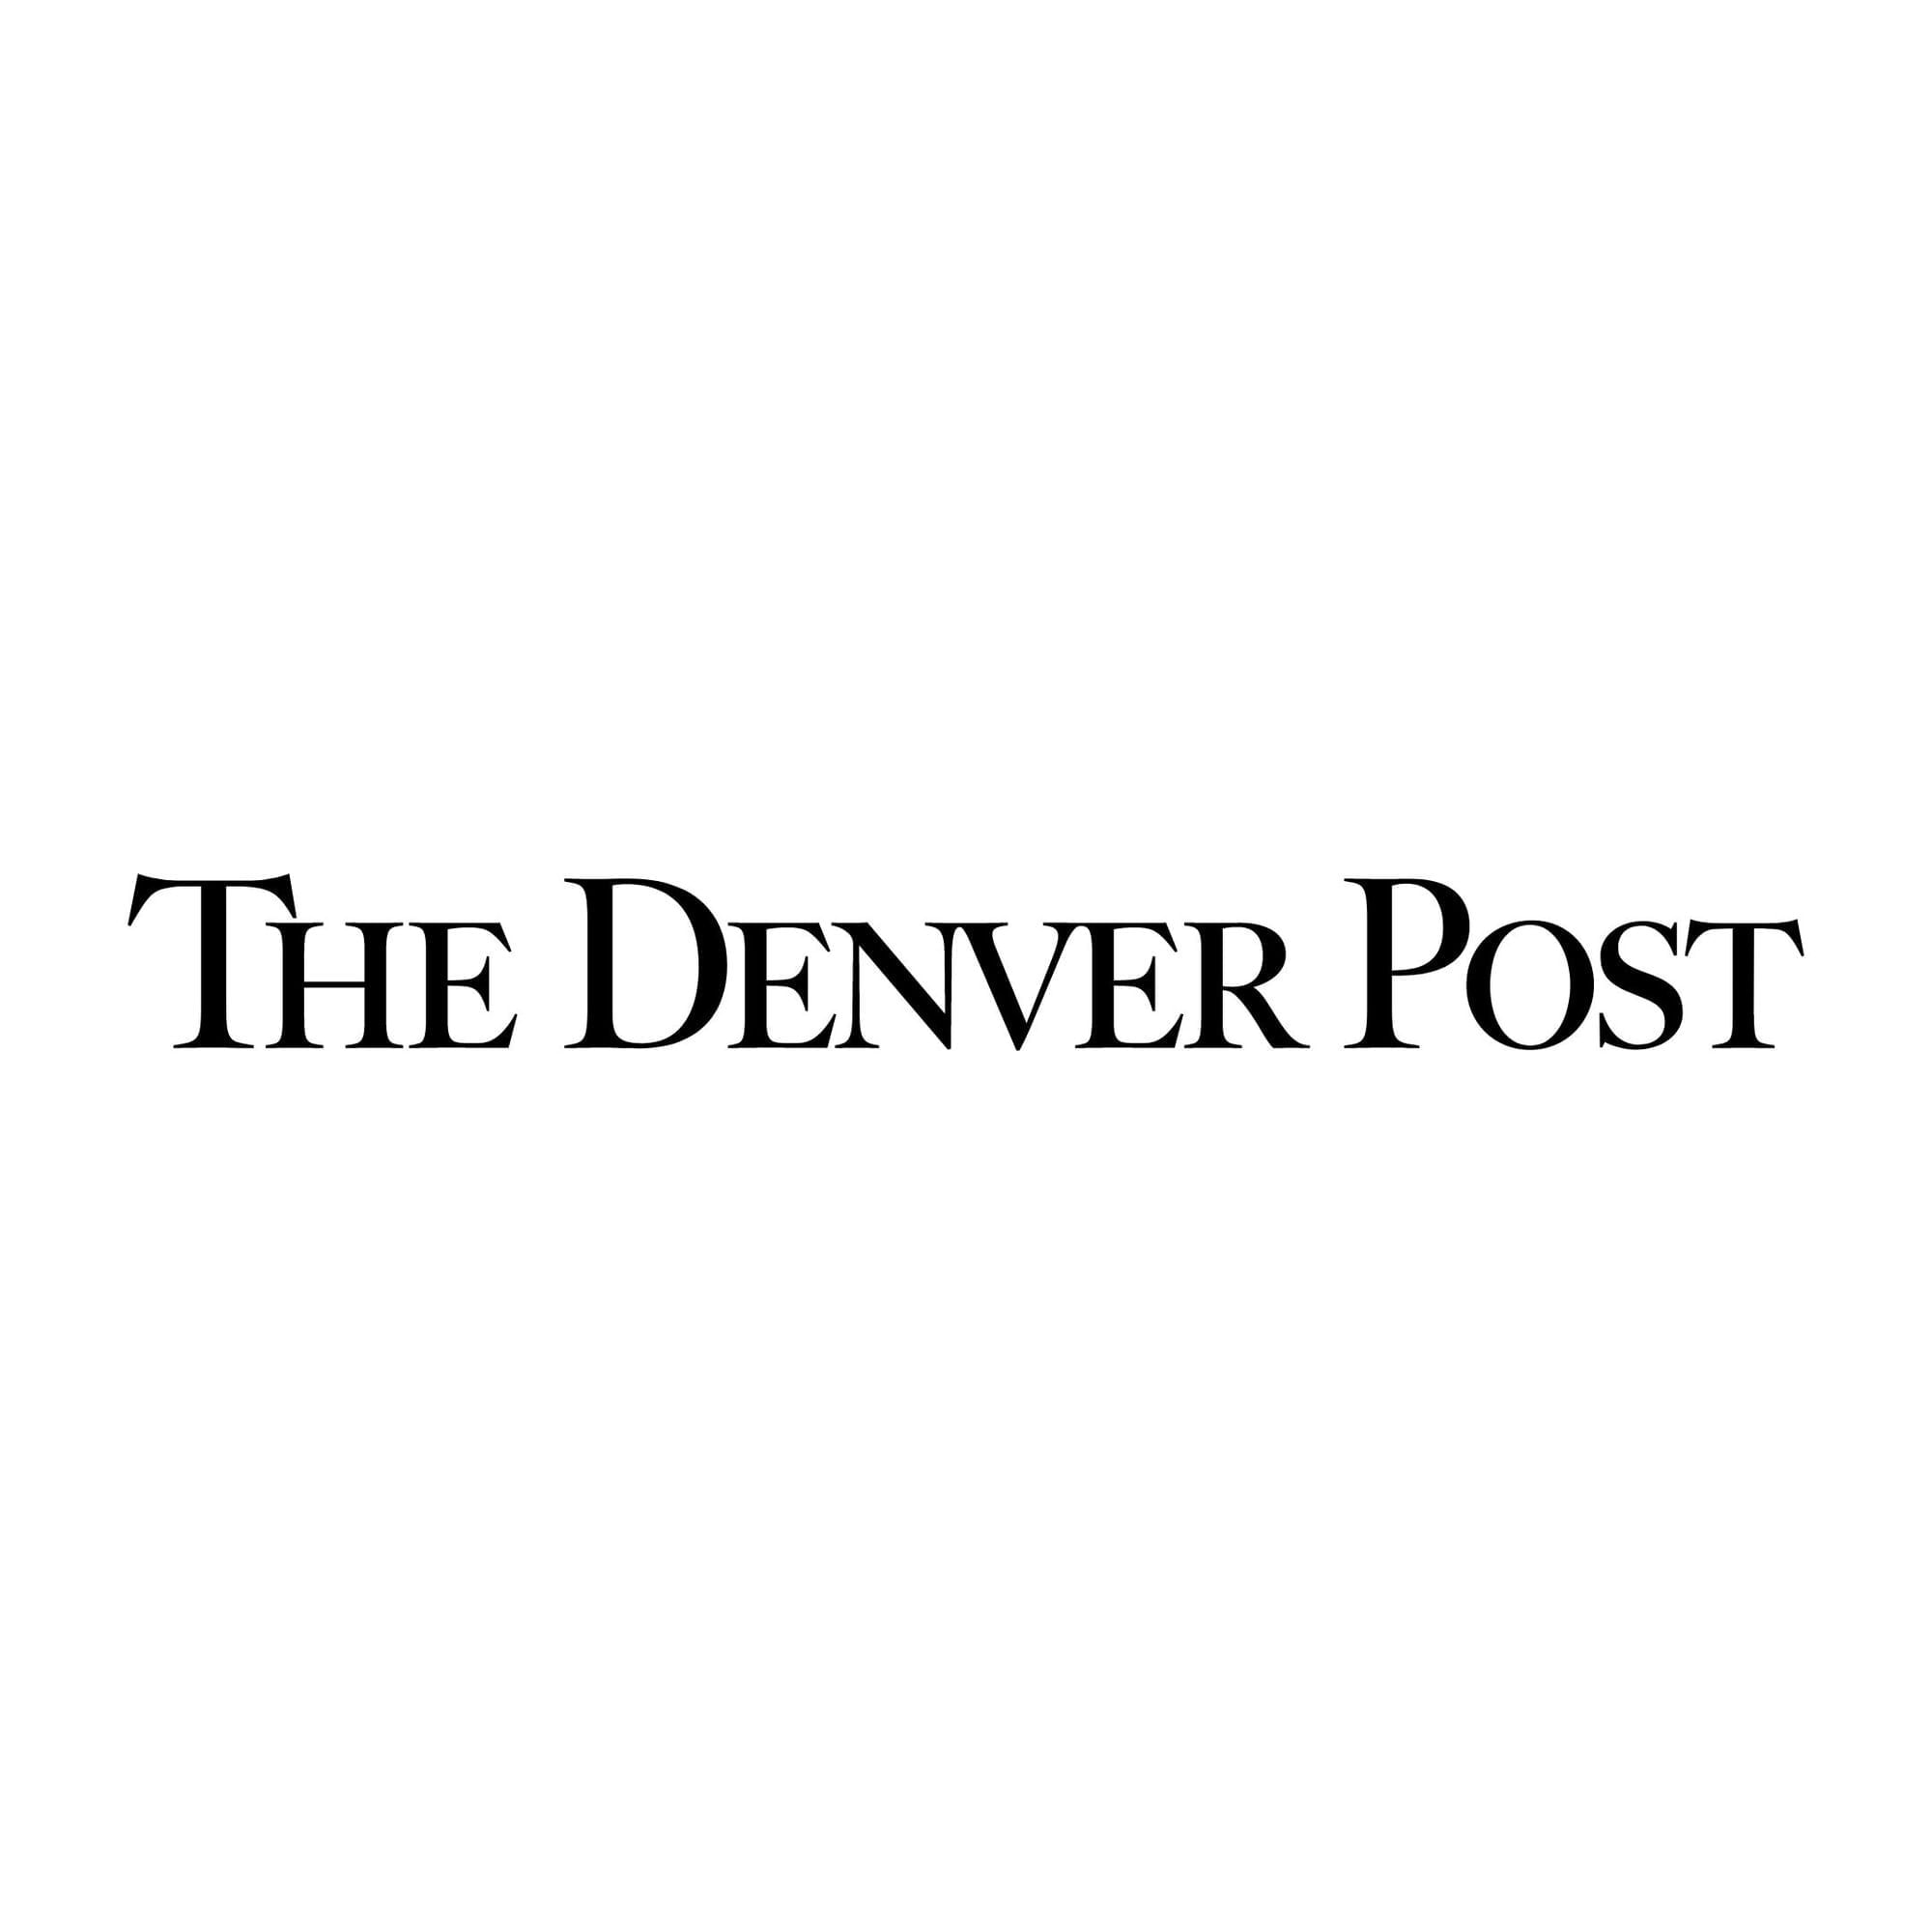 Official logo of The Denver Post used at Kinship Landing